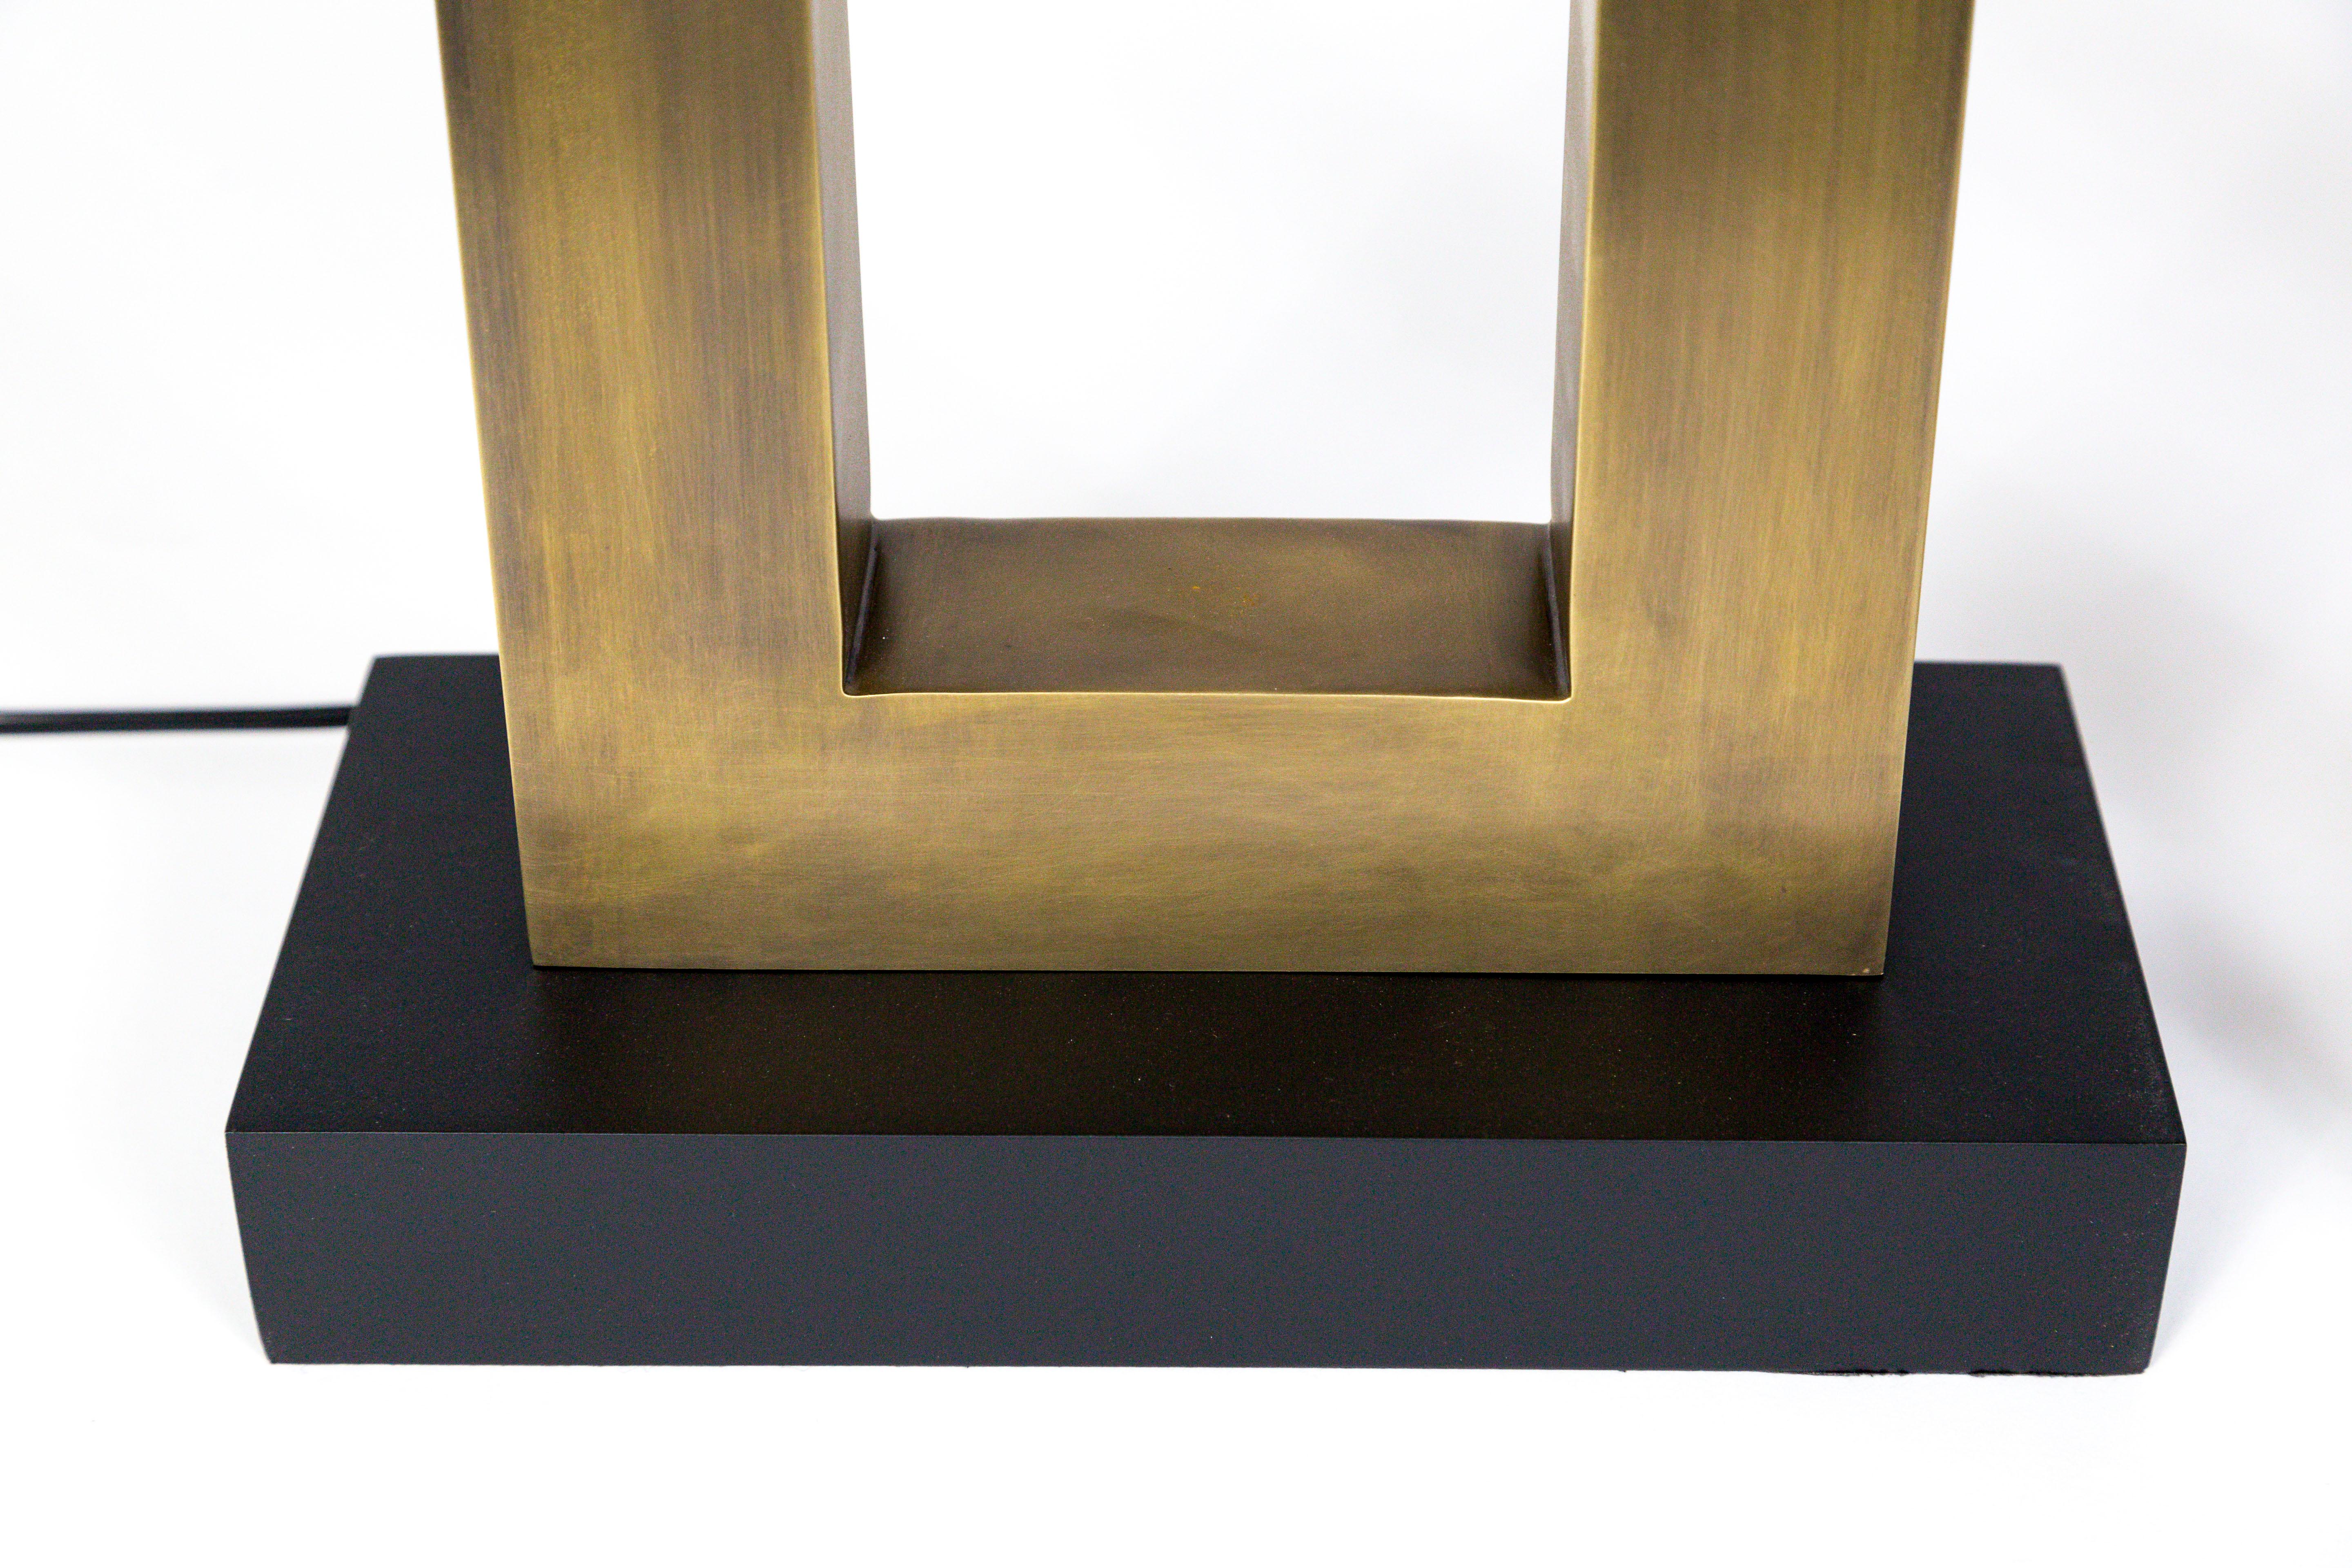 Rectangular Antiqued Brass Table Lamps, 'Pair' (Ende des 20. Jahrhunderts)